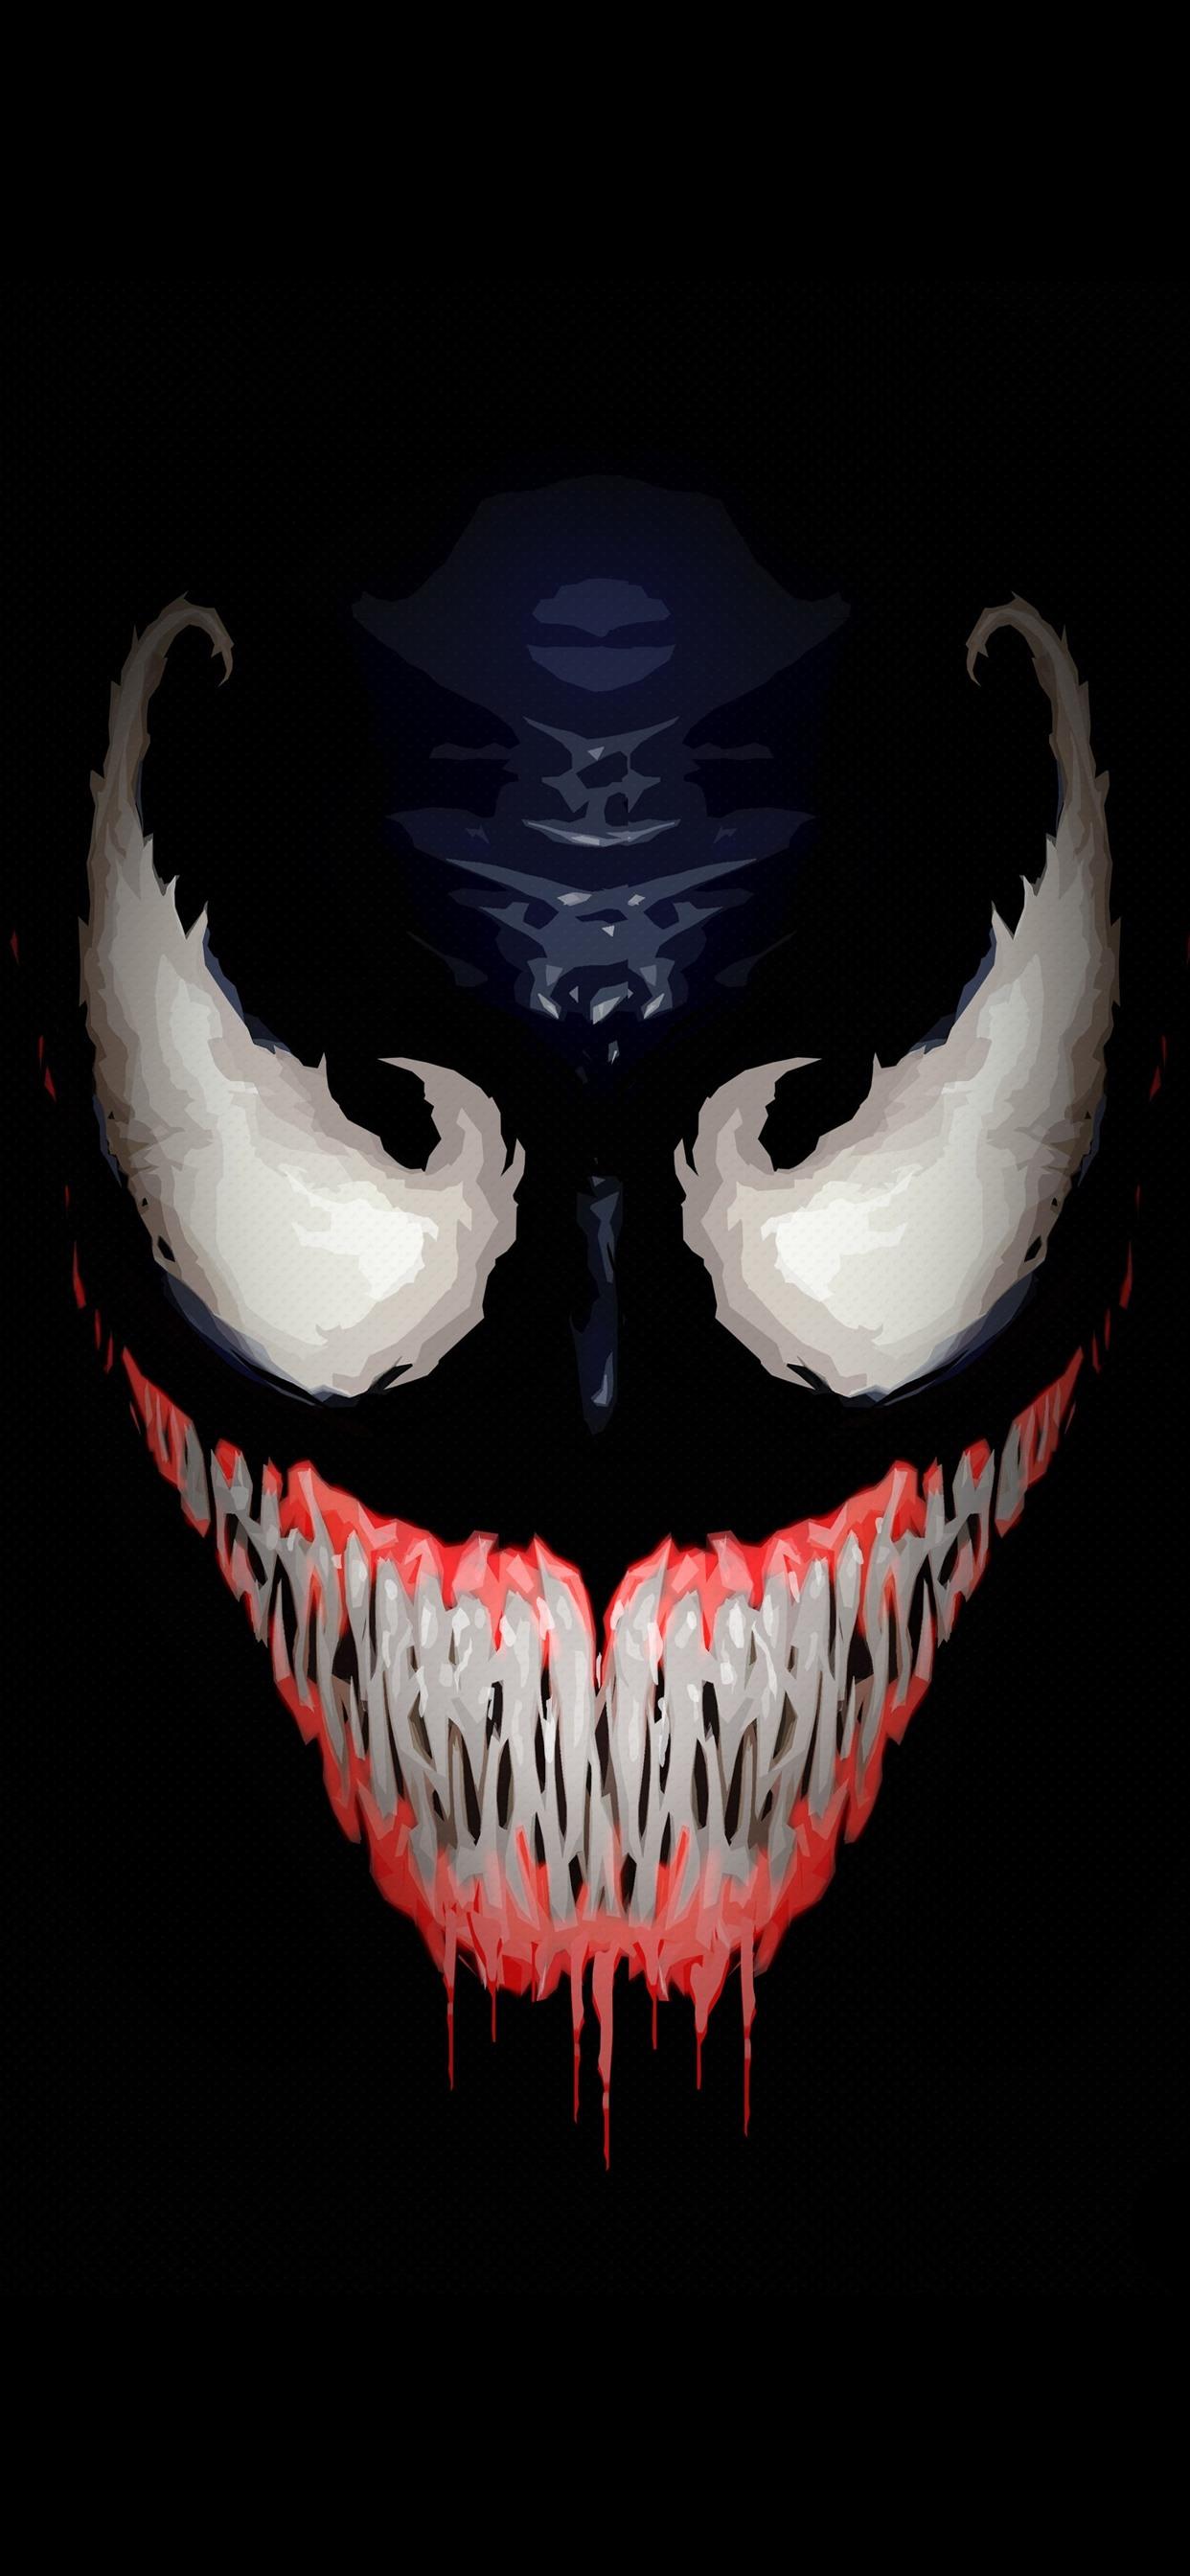 Venom Iphone Wallpapers